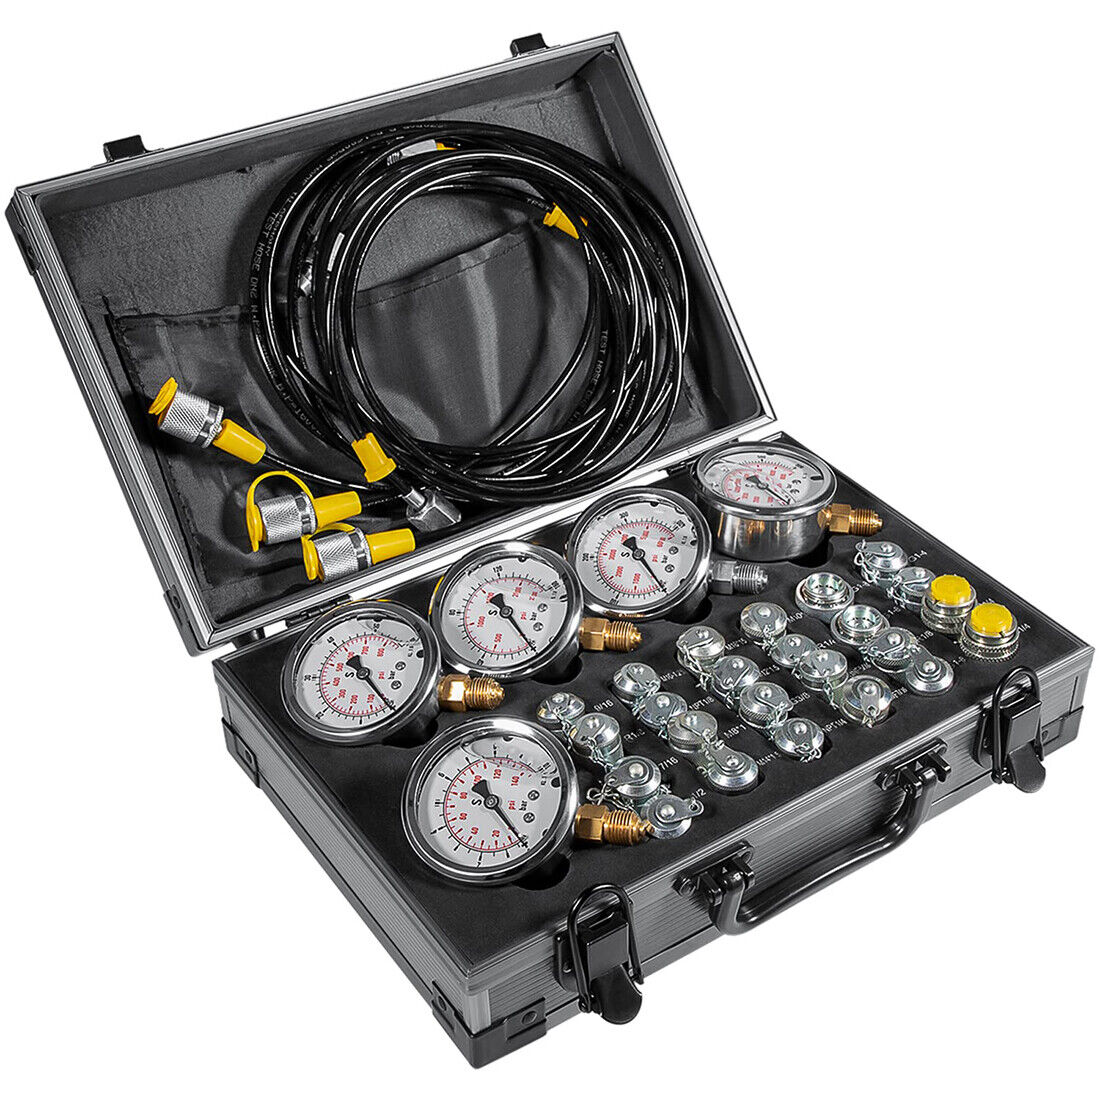 60P Hydraulic Pressure Test Kit for Caterpillar Case John Deere Bobcat Komatsu